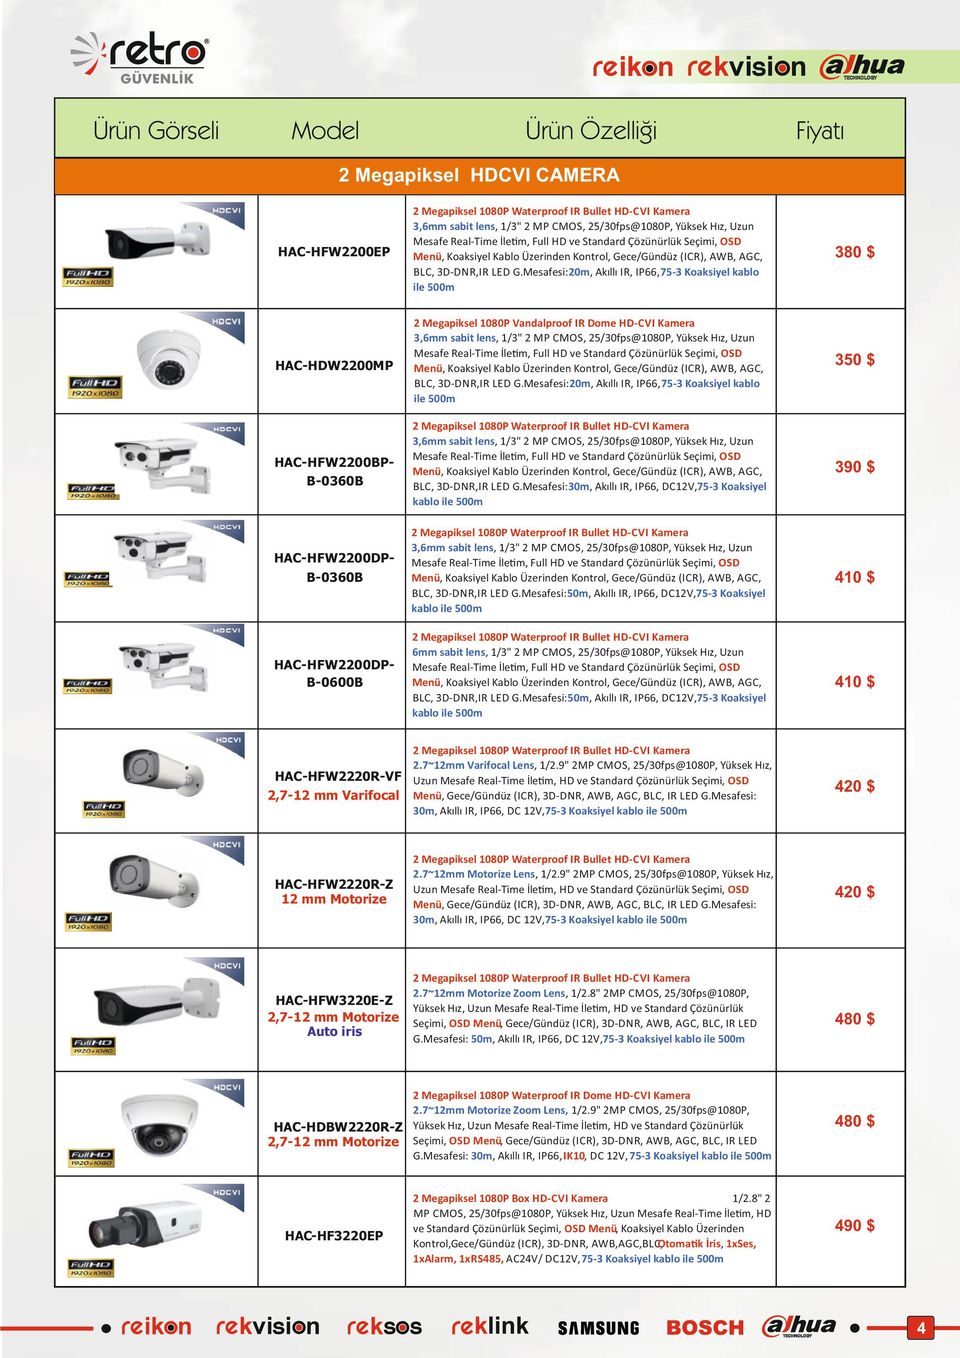 Mesafesi: 20m, Akıllı IR, IP66, 75-3 Koaksiyel kablo ile 350 $ BLC, 3D-DNR,IR LED G.